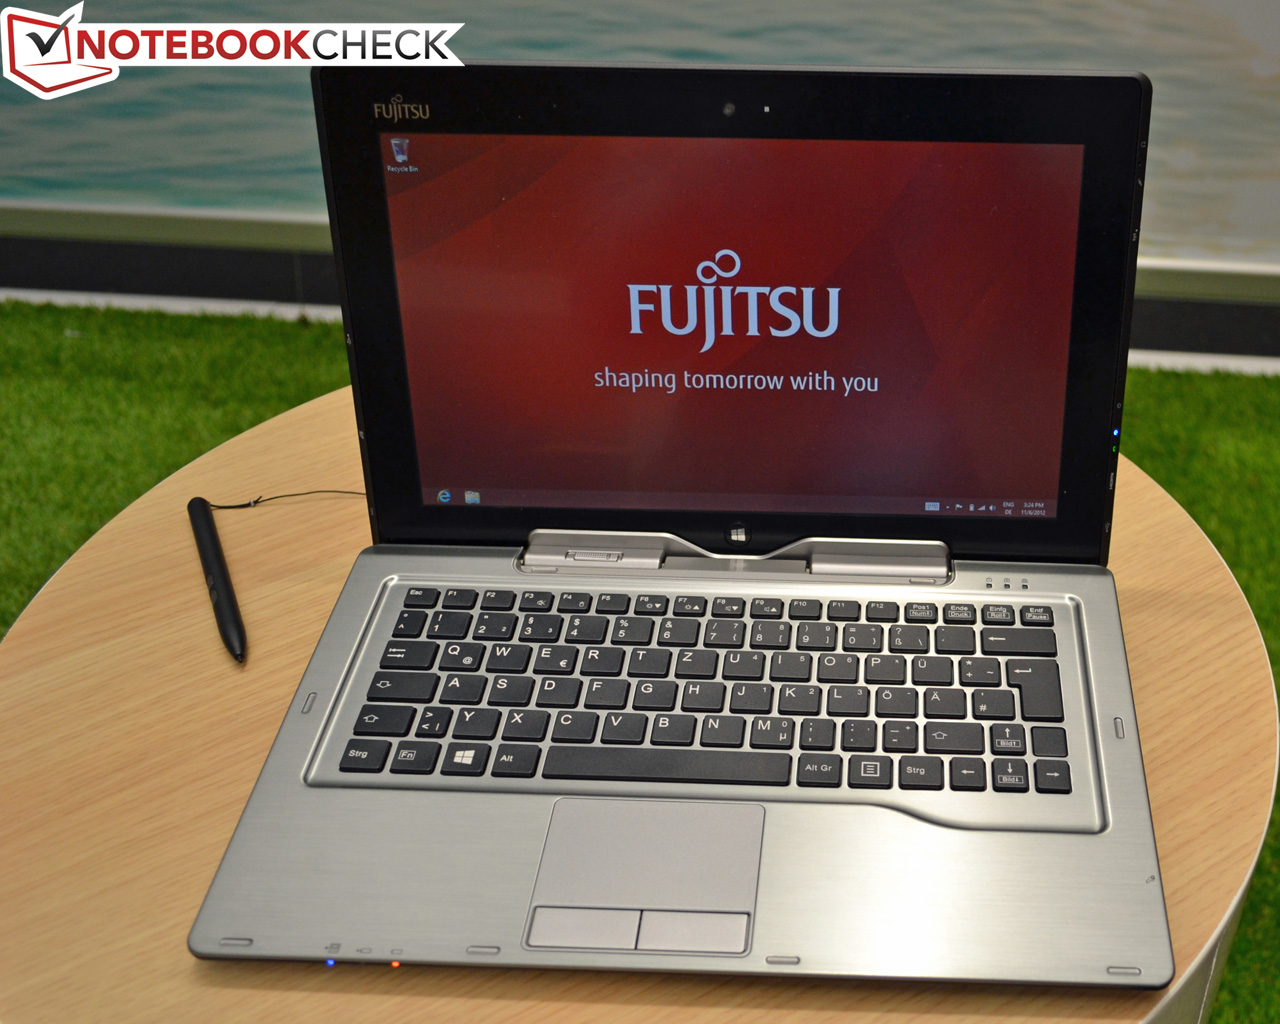 Fujitsu Stylistic Q702 - Notebookcheck.com News